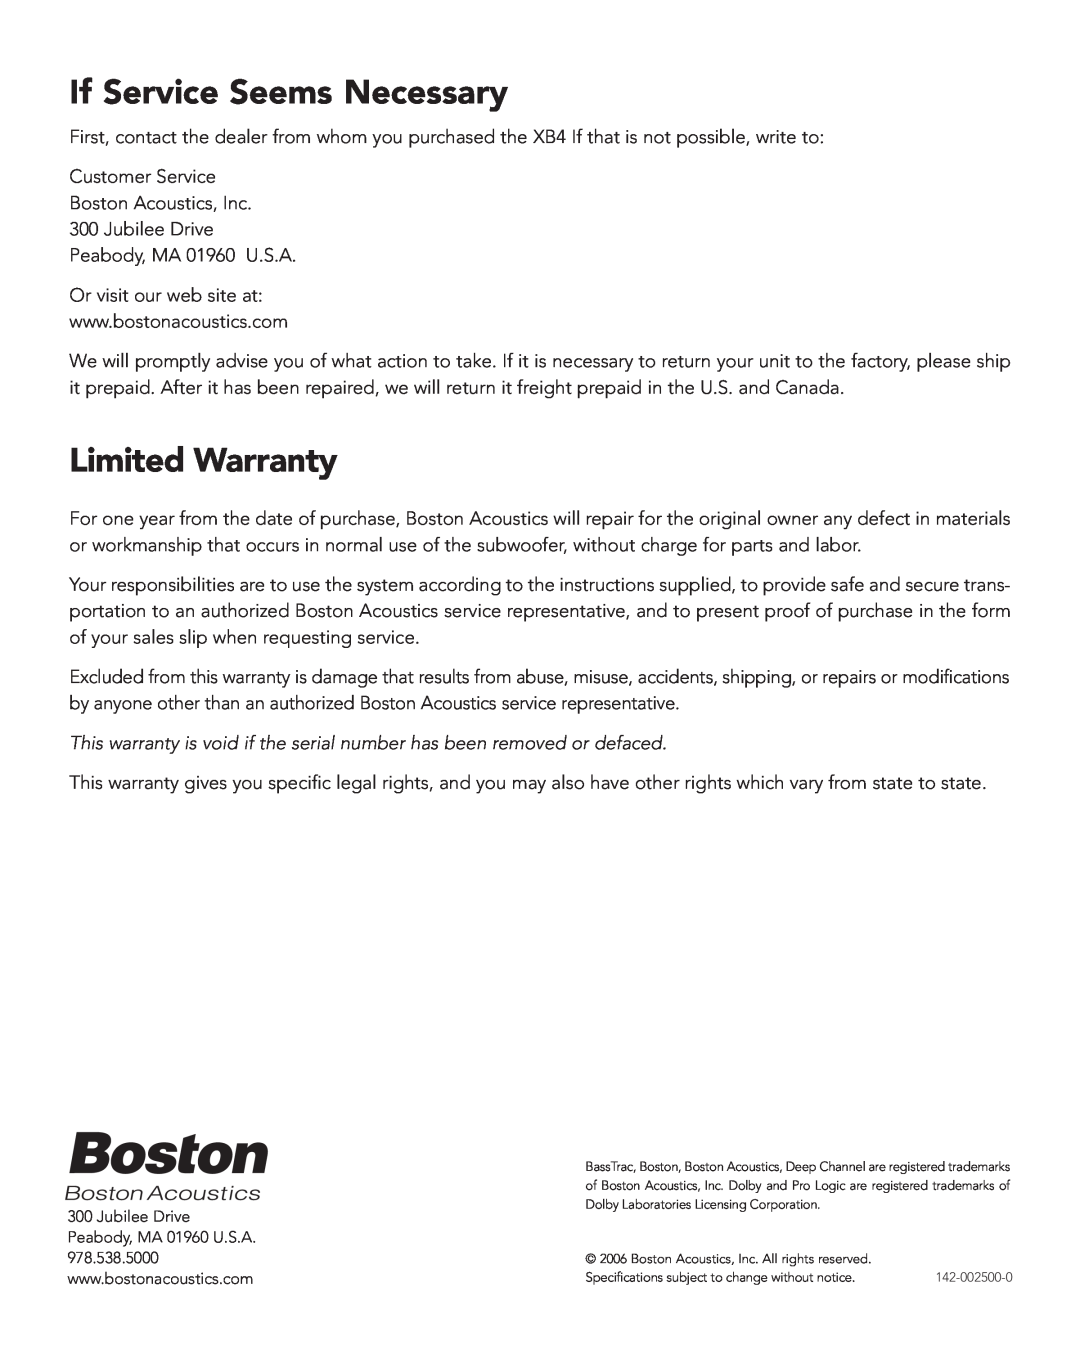 Boston Acoustics XB4 manual If Service Seems Necessary, Limited Warranty 